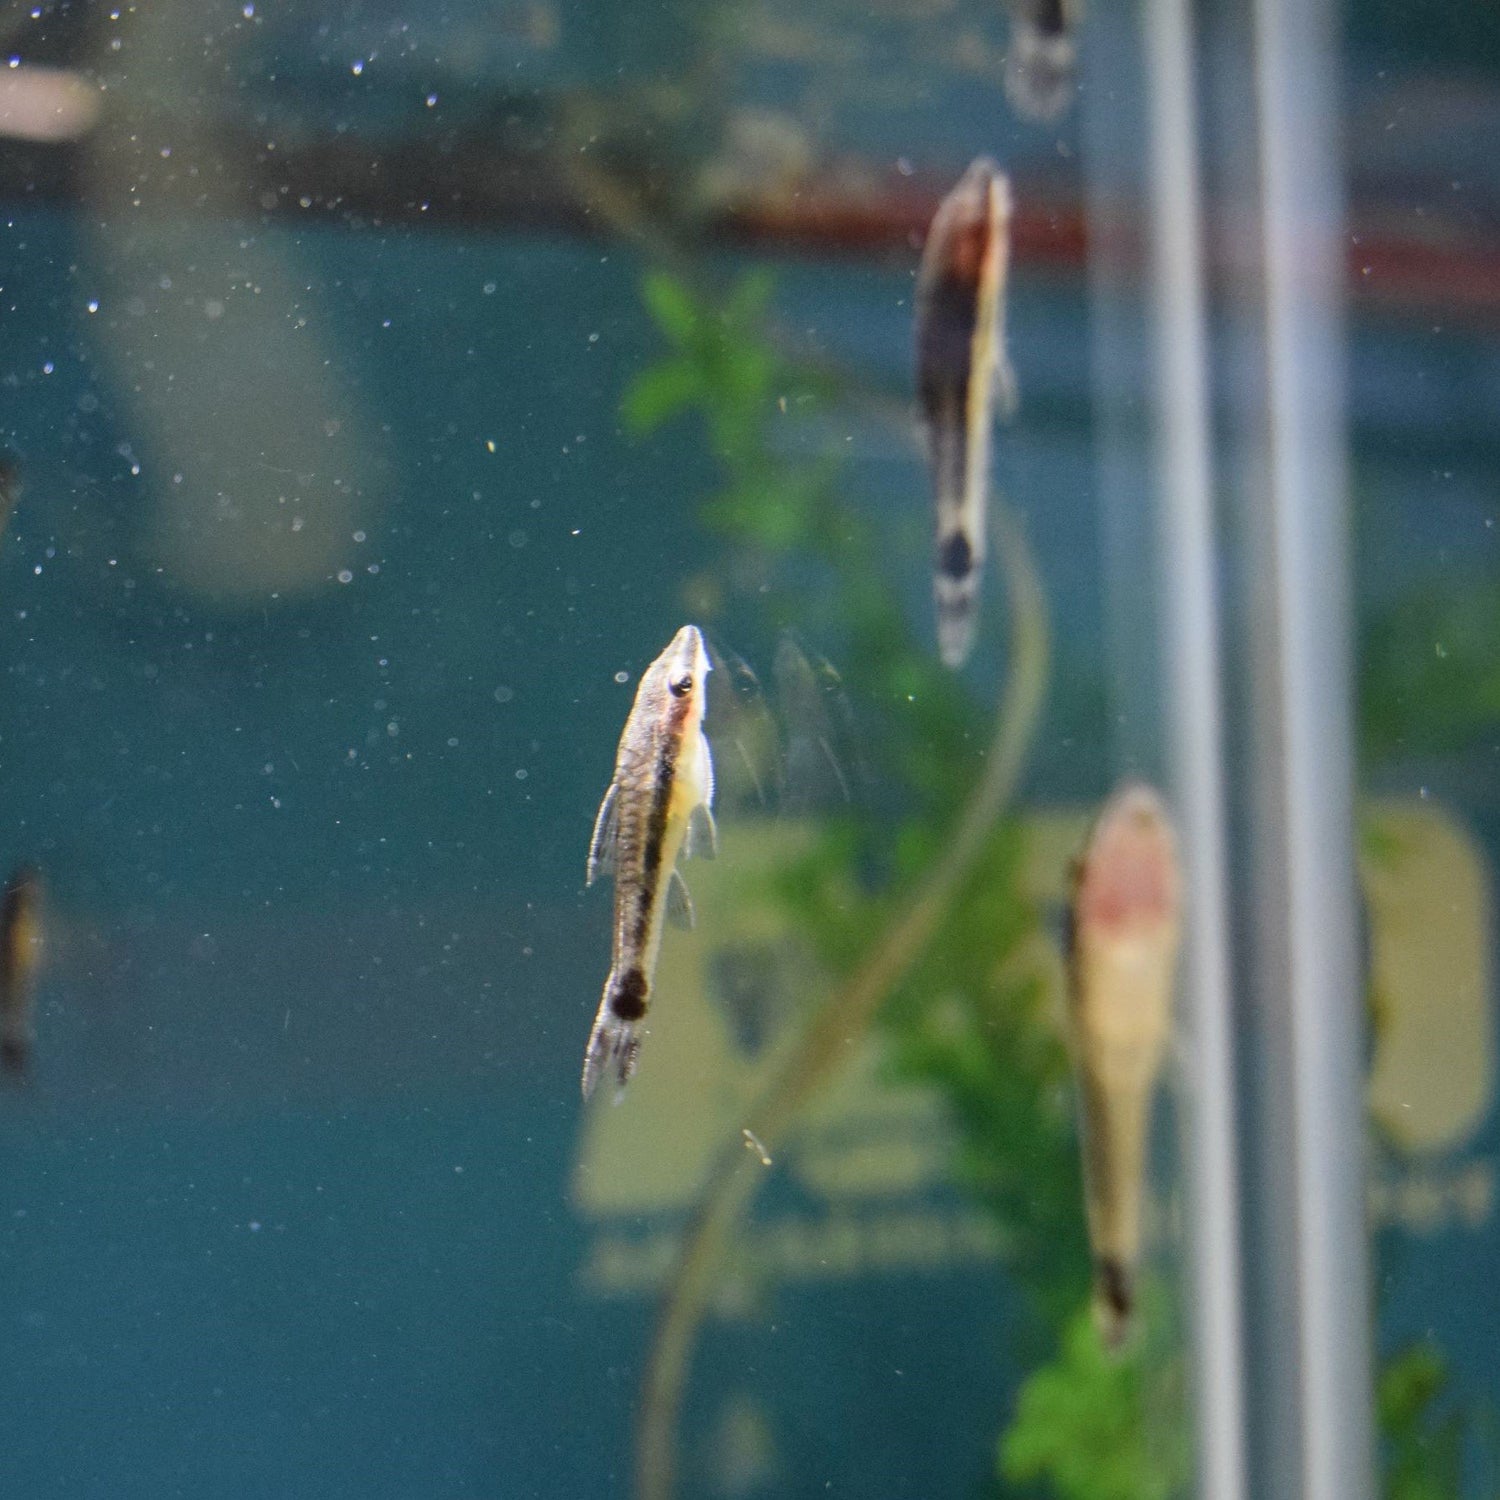 Nano Fish